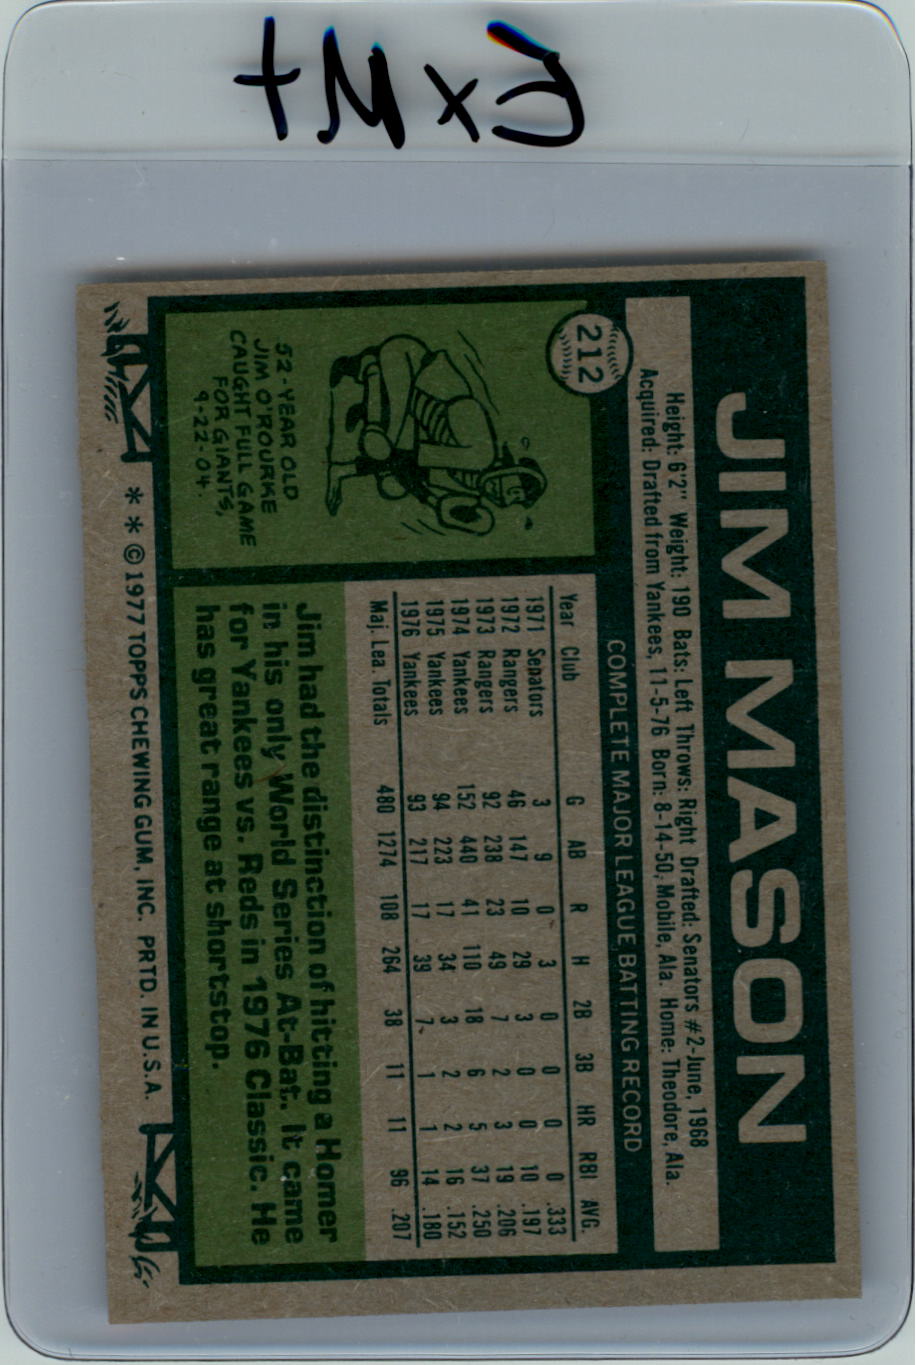 1977 Topps #212 Jim Mason back image